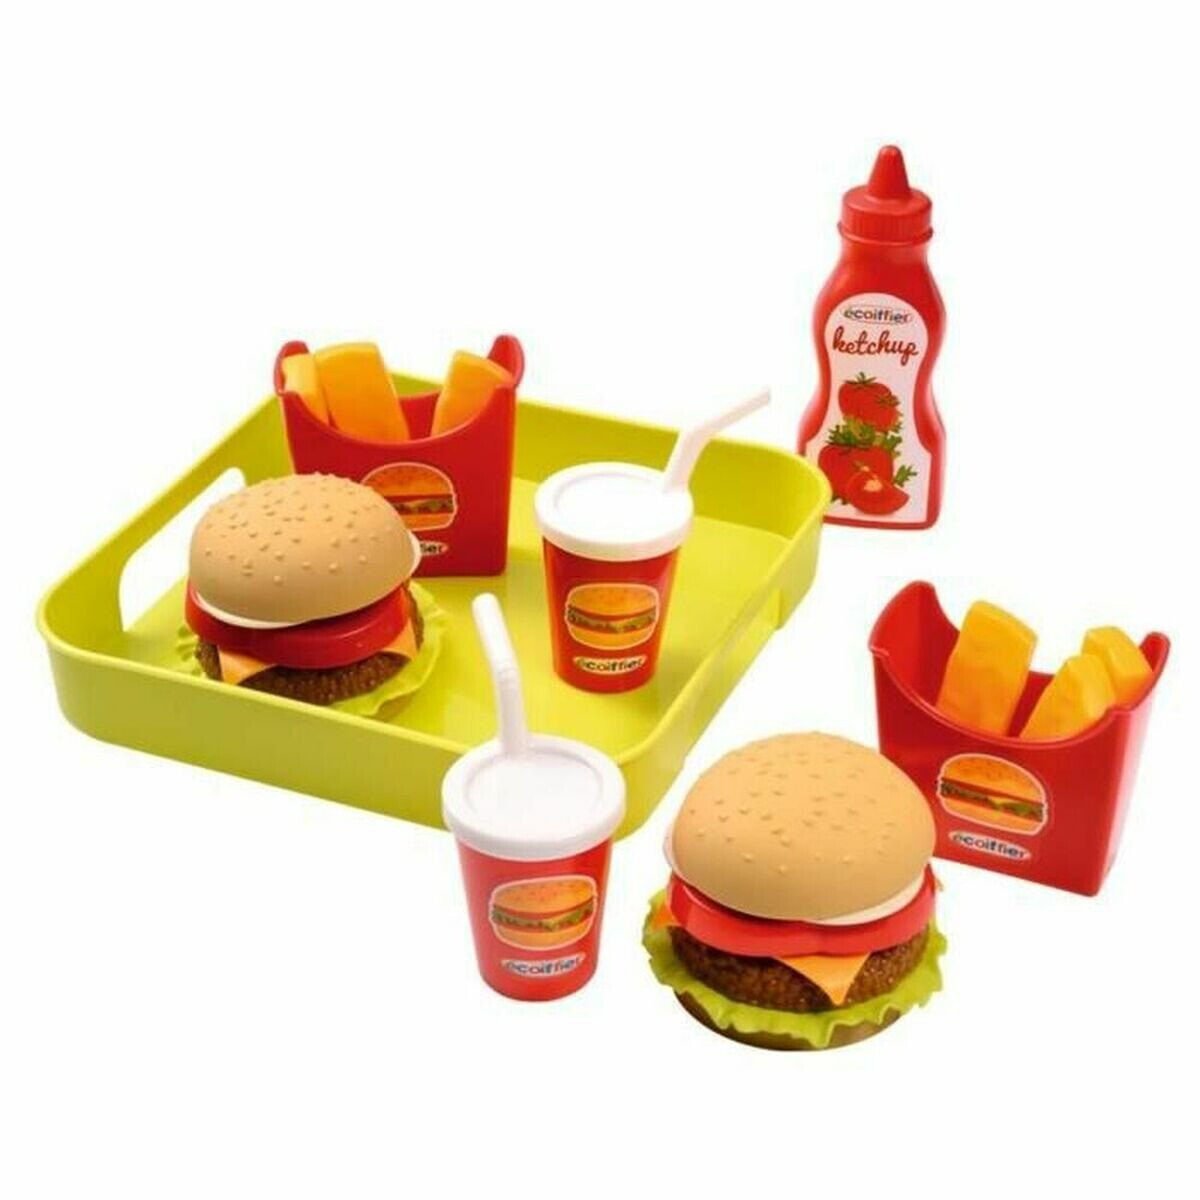 Toy Food Set Ecoiffier Hamburger Tray